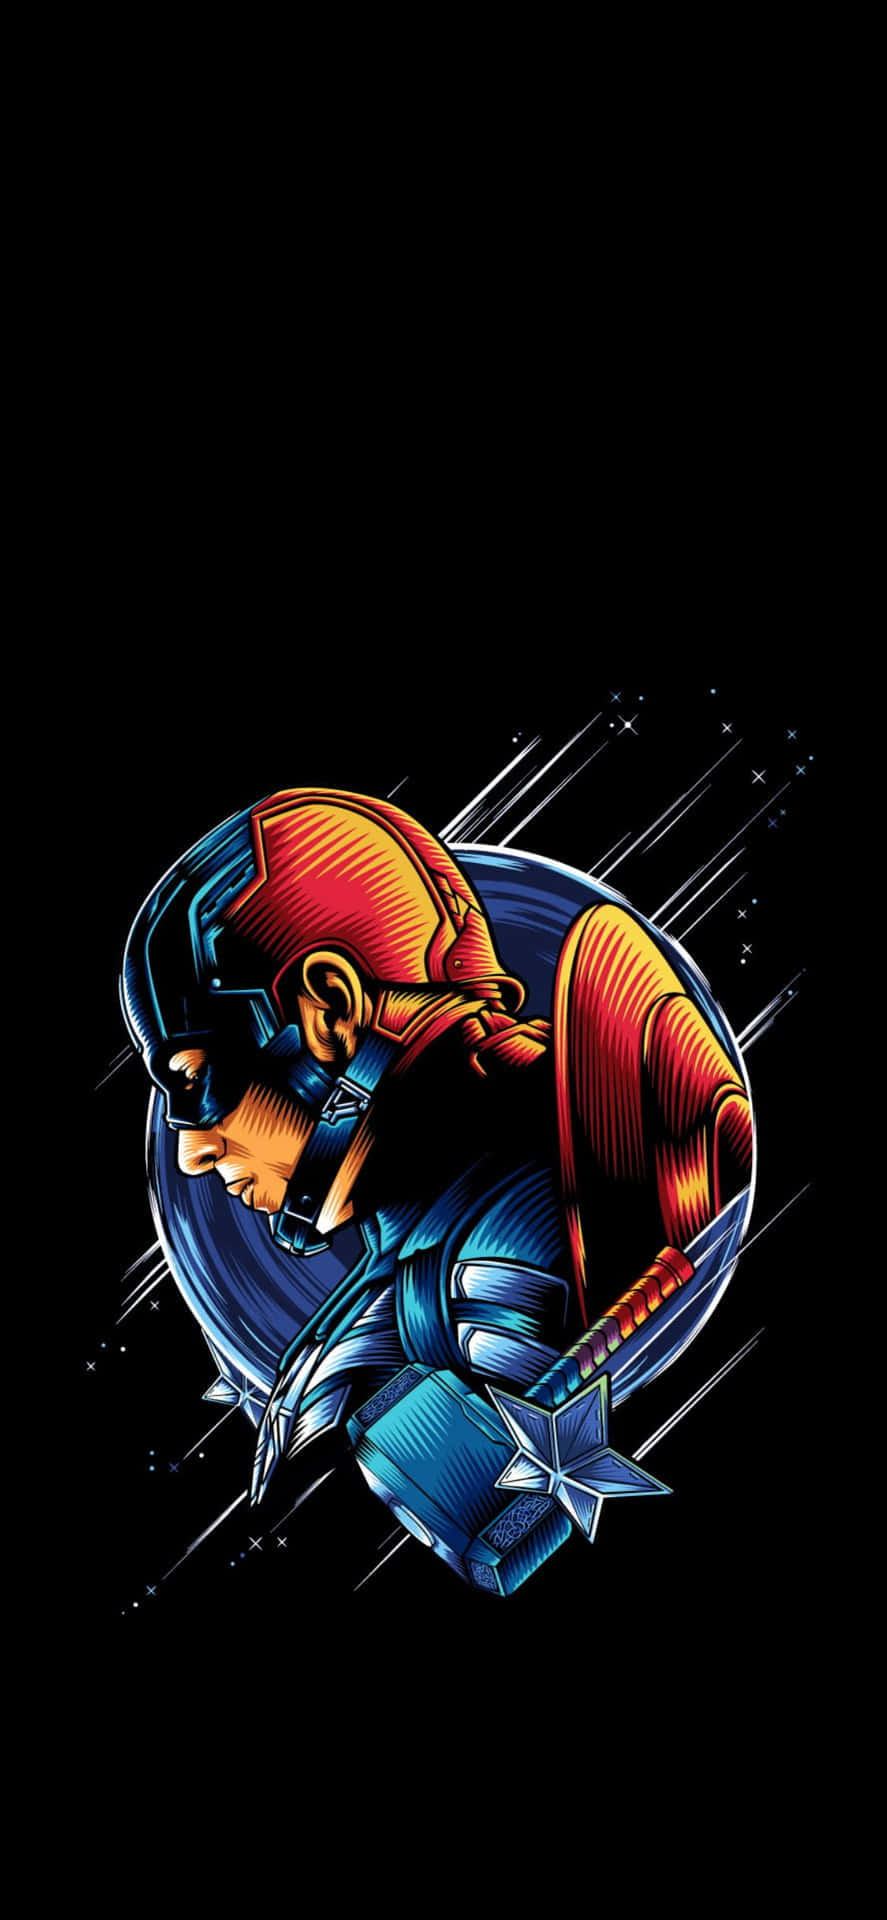 Fondode Pantalla De Captain America De Los Avengers En Arte Digital Para Iphone Xs.